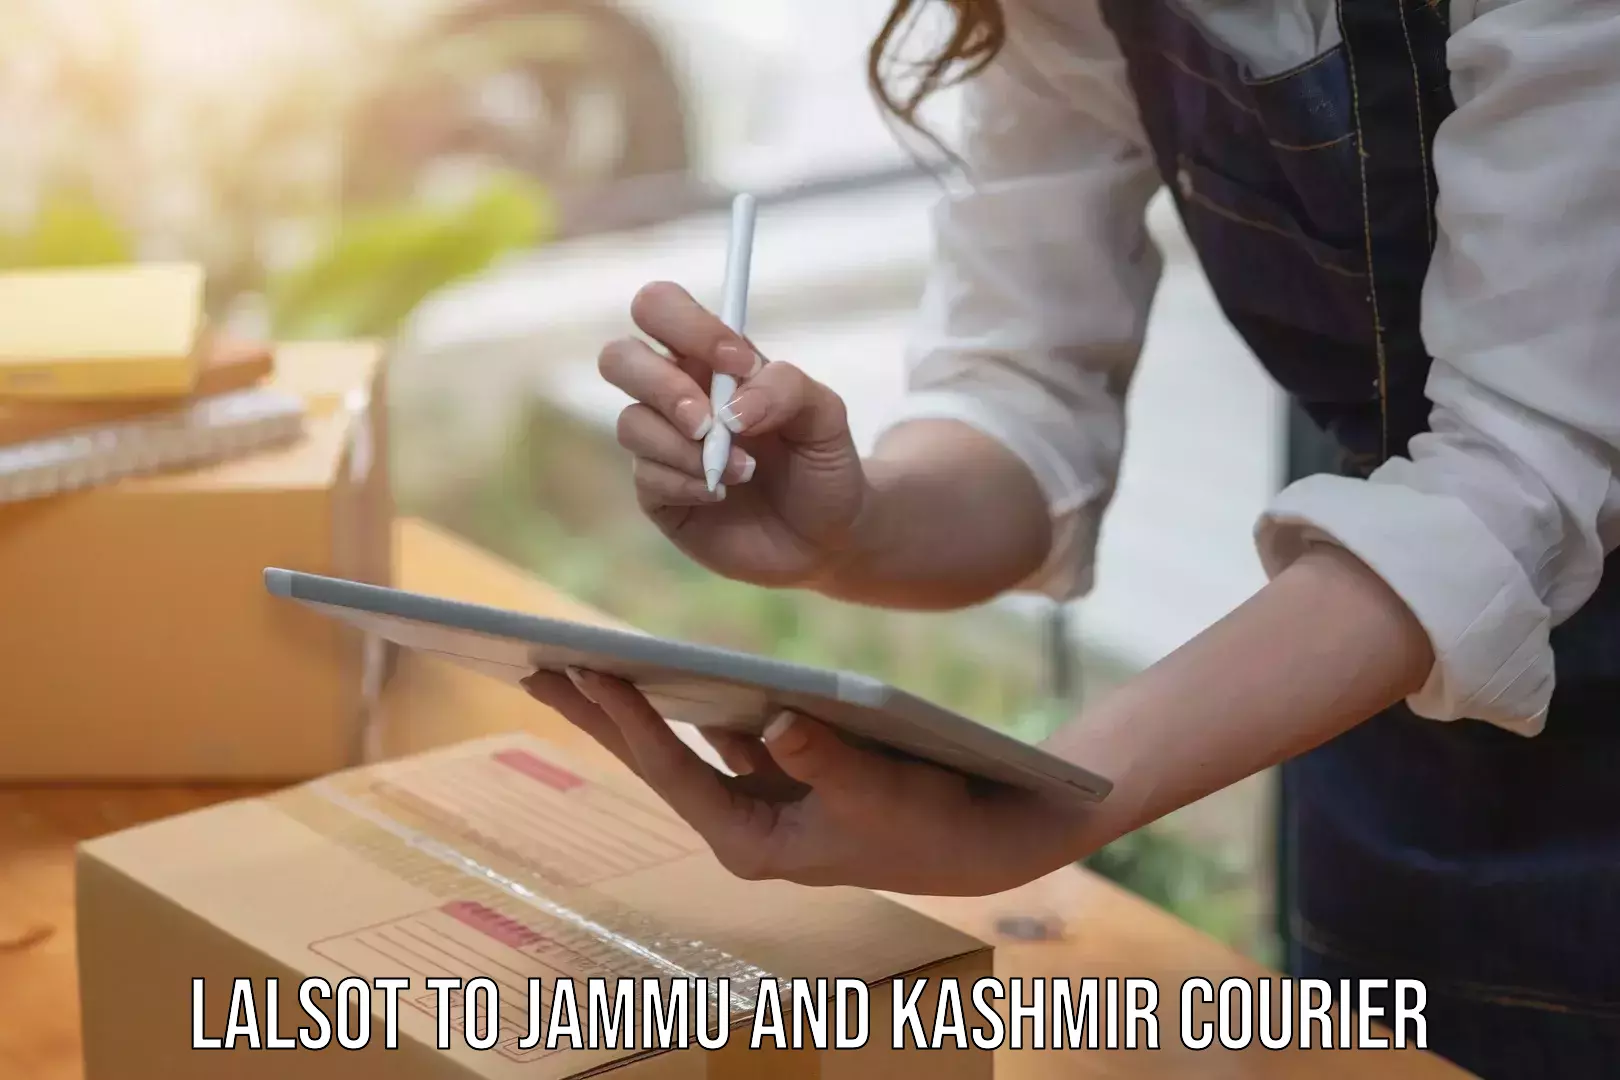 Digital courier platforms Lalsot to Jammu and Kashmir